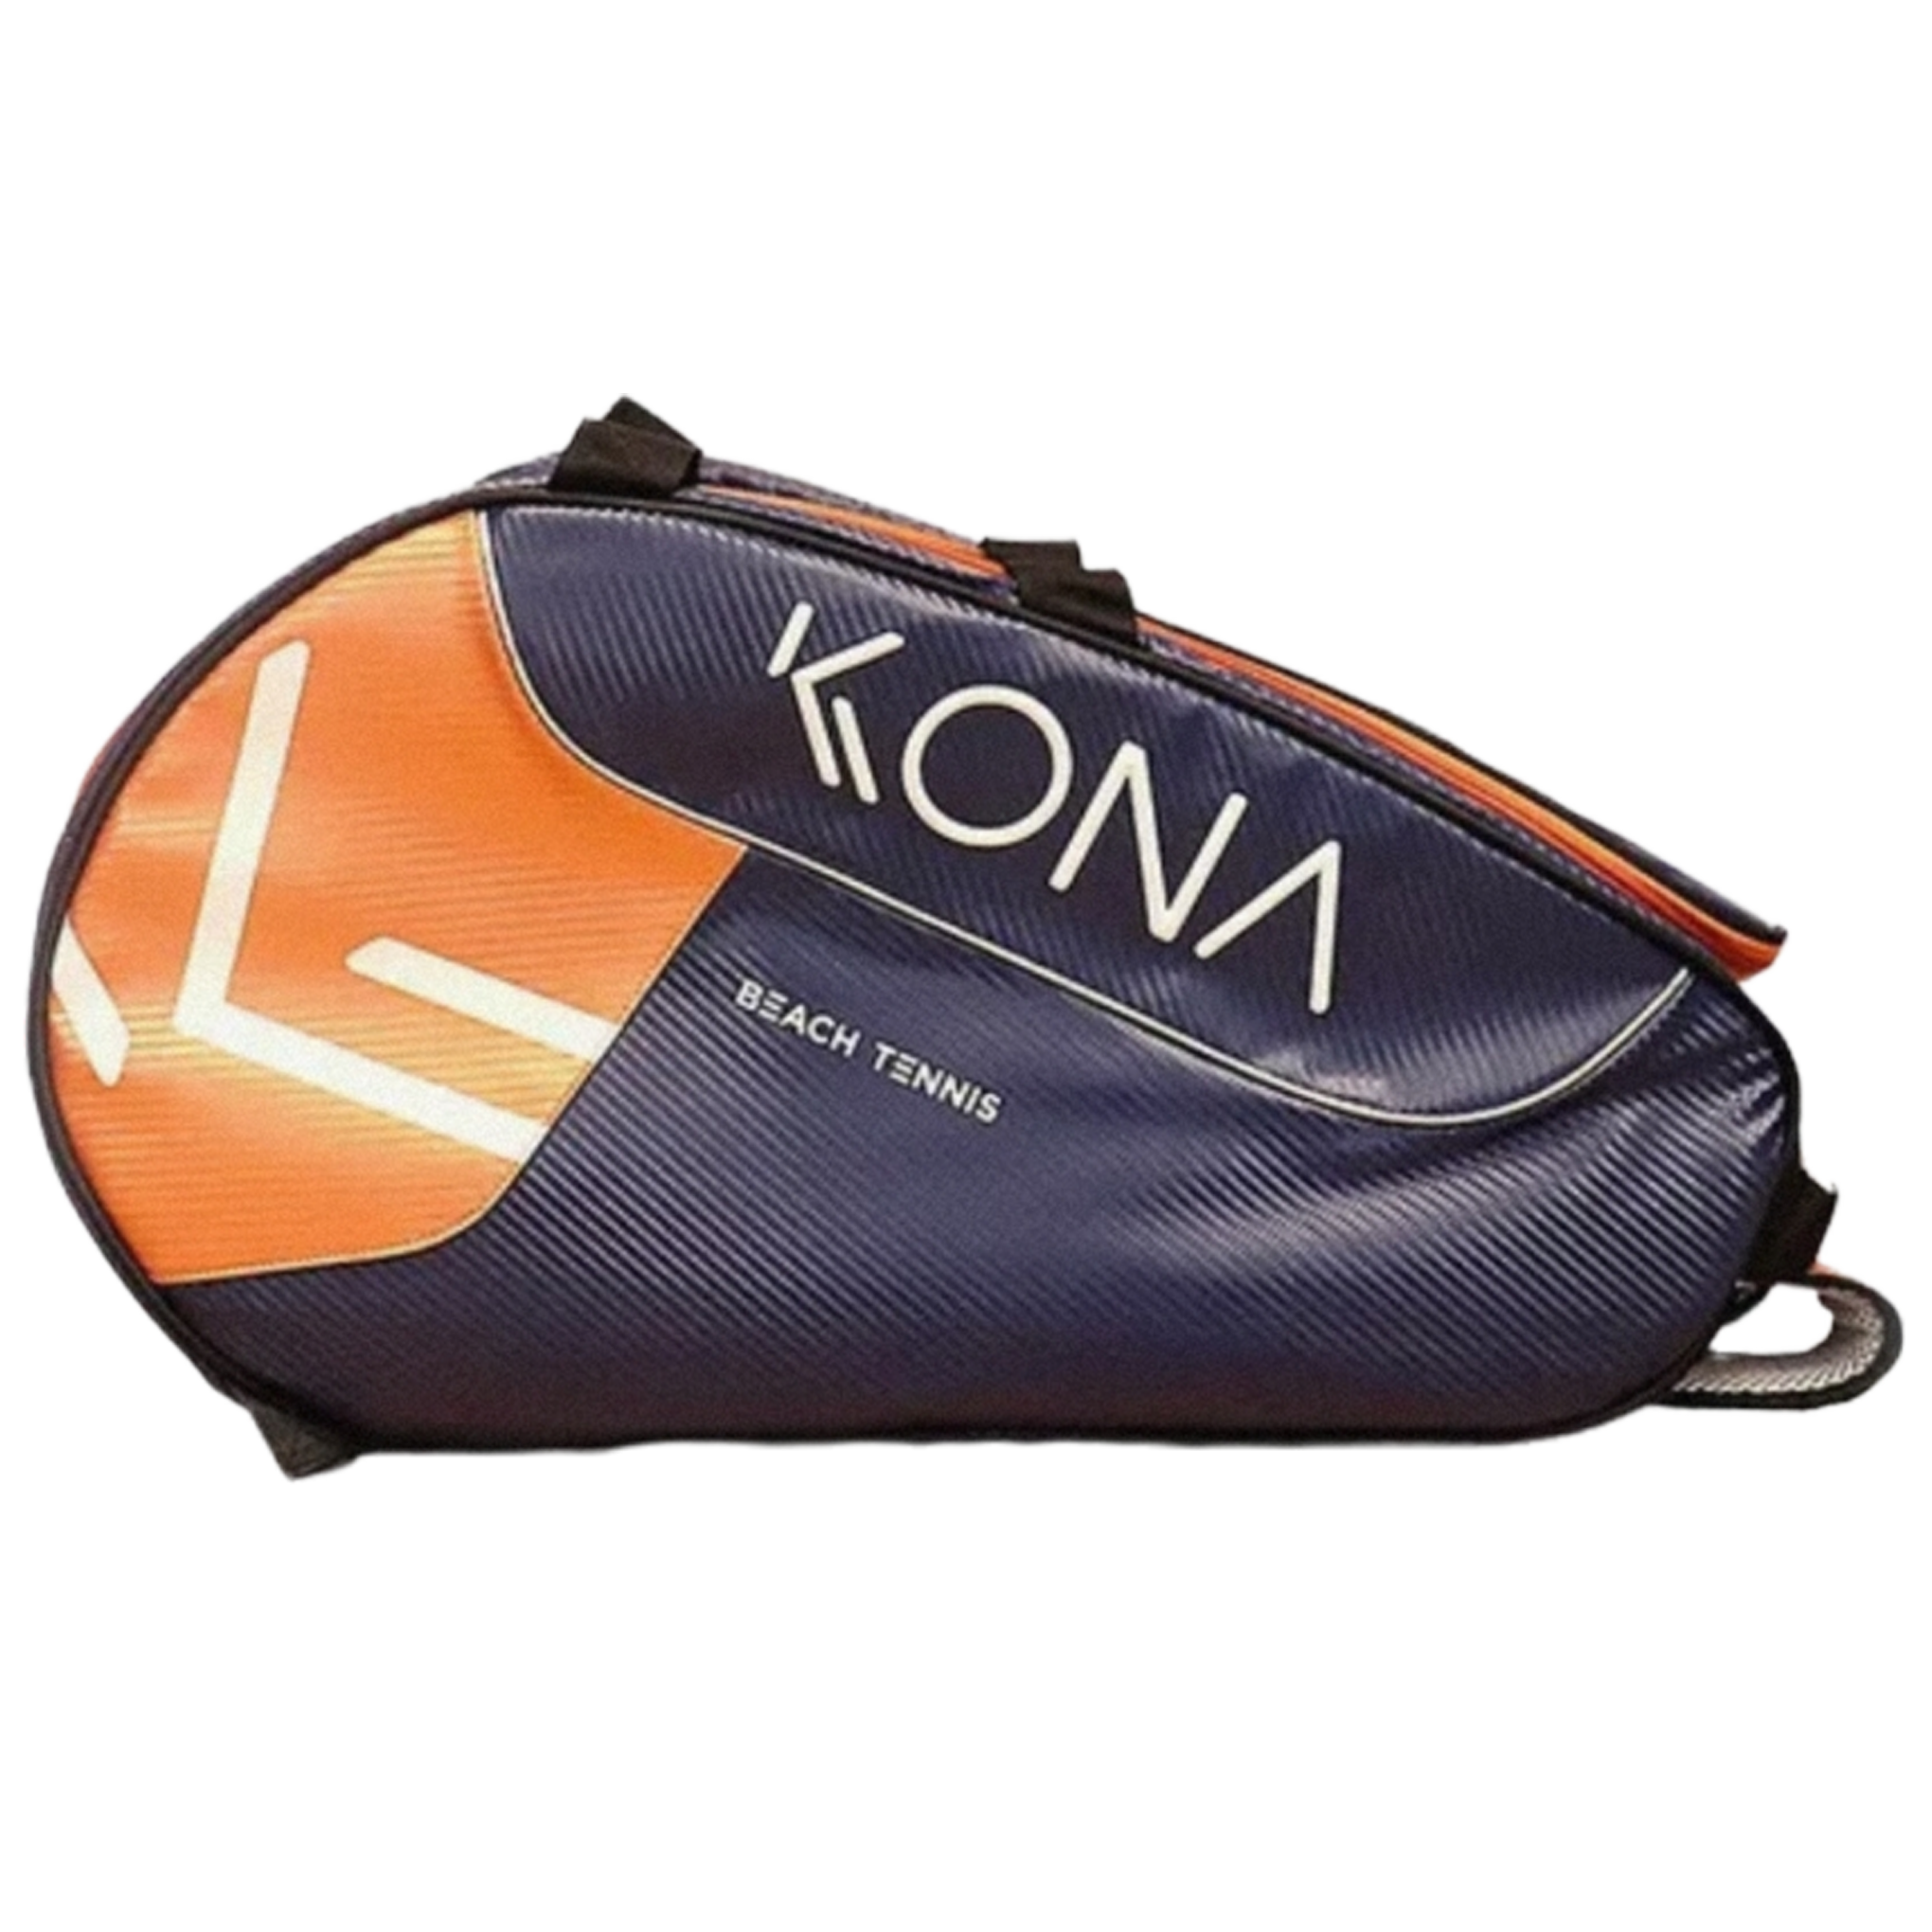 Kona Beach Tennis Racket Blue Bag - Thermal 2022